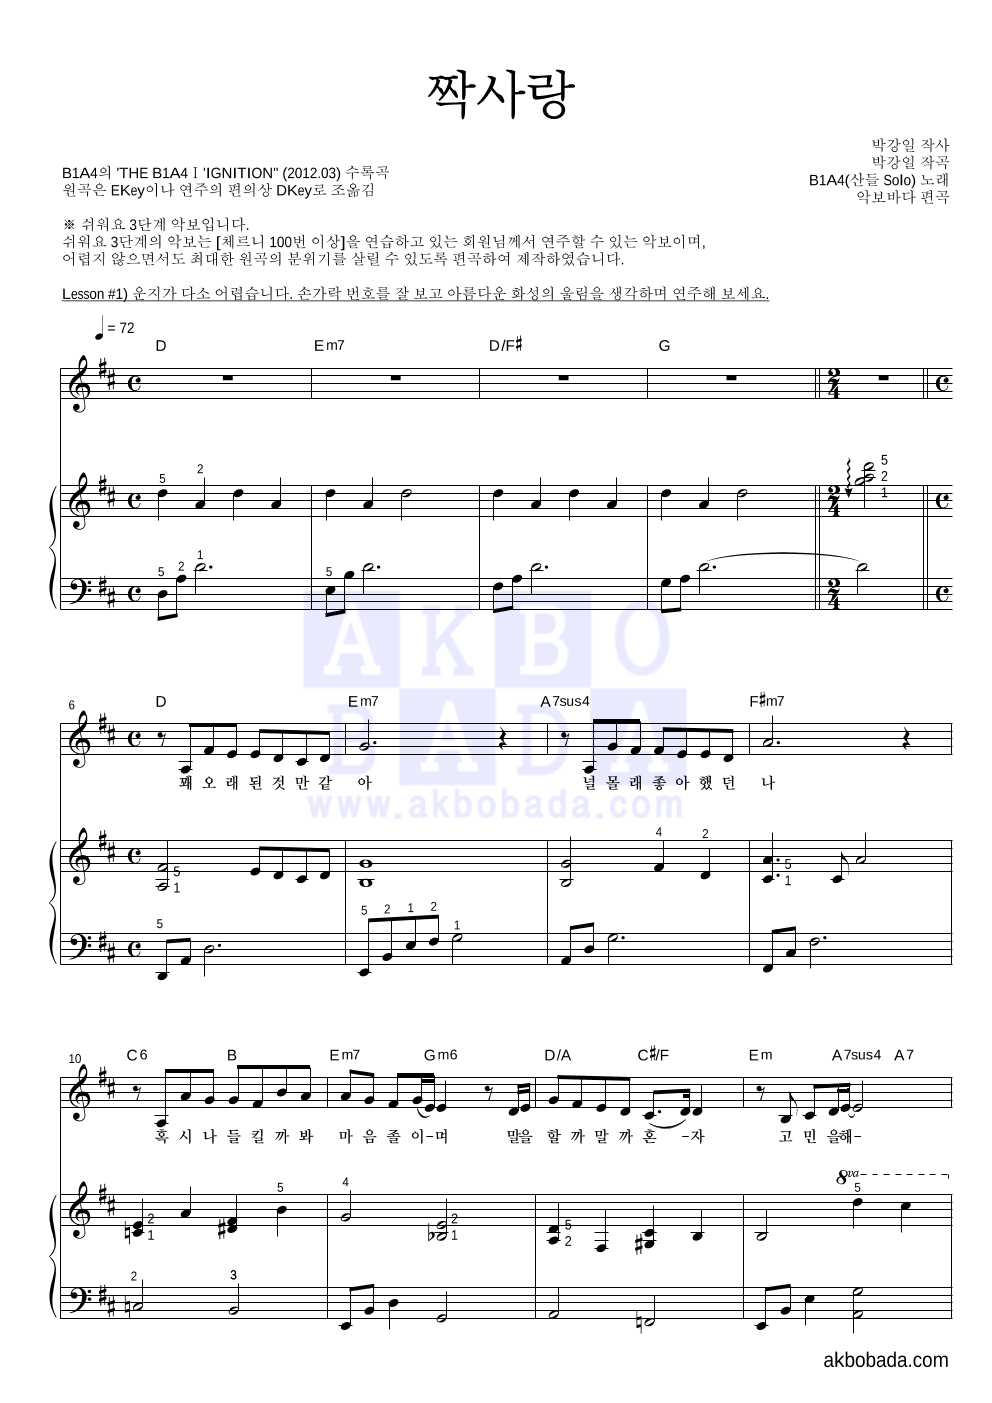 B1A4 - 짝사랑 (산들 Solo) 피아노3단-쉬워요 악보 